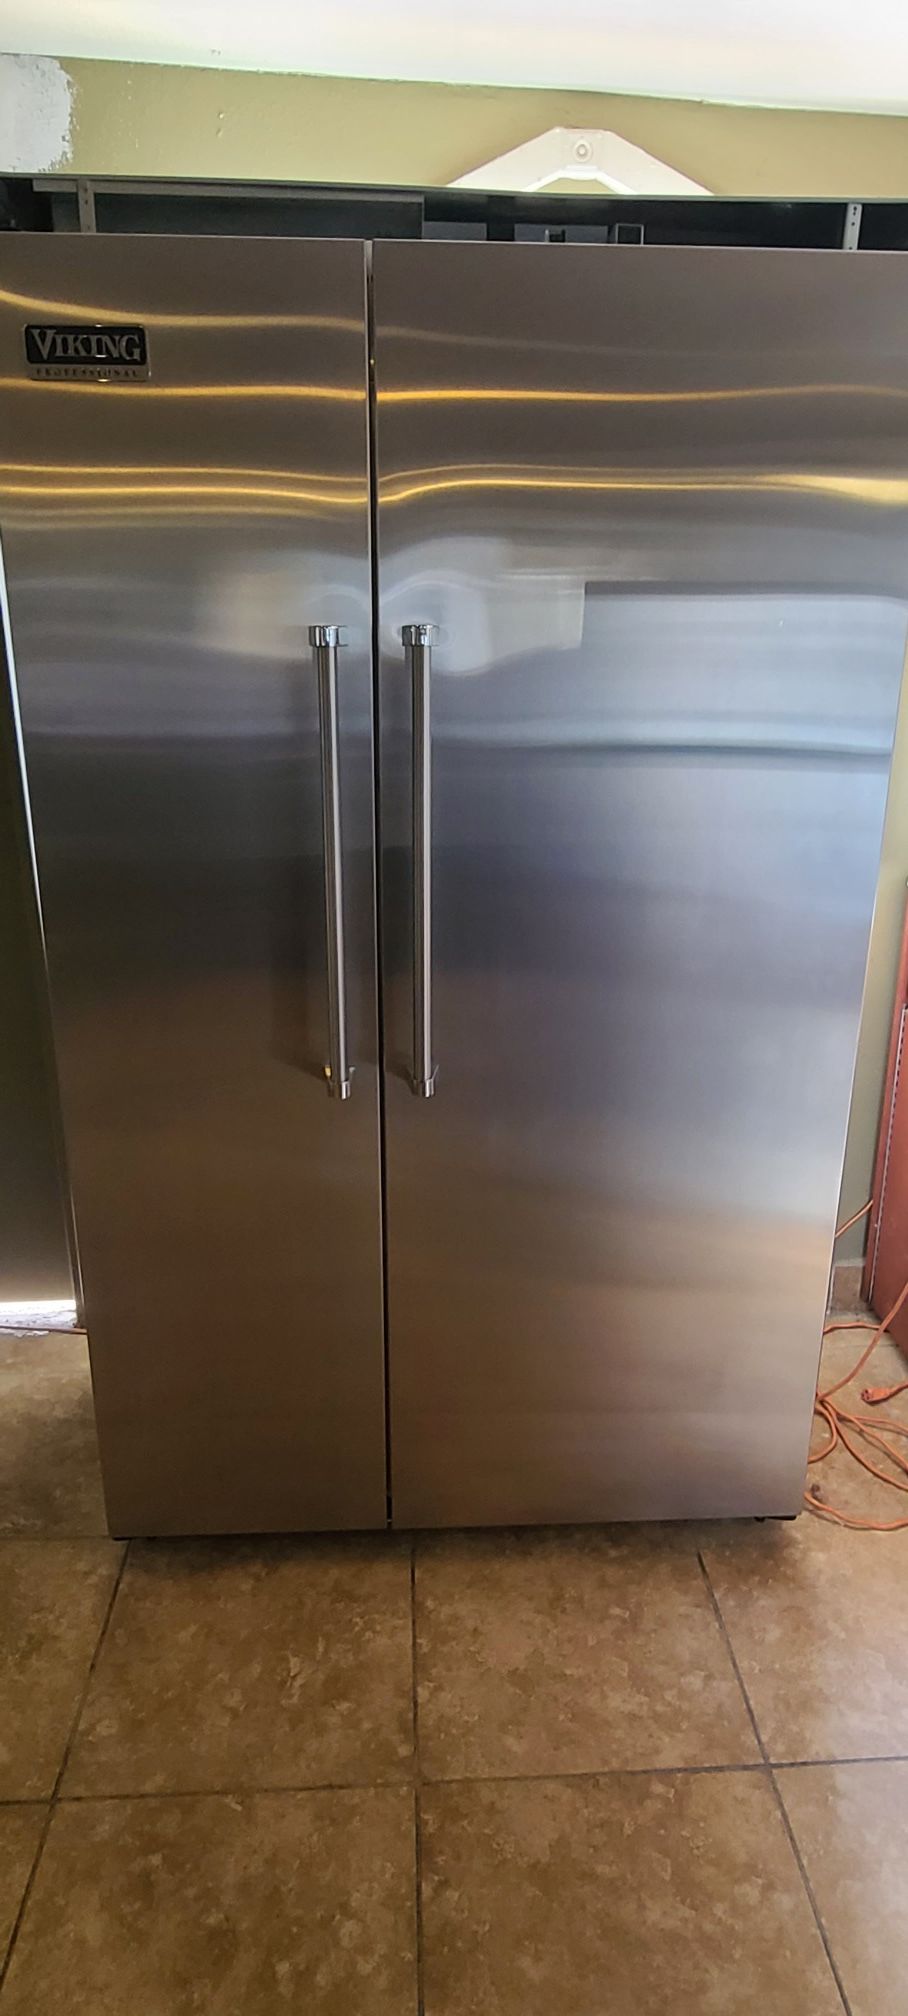 Viking fridge doble oven and microwave